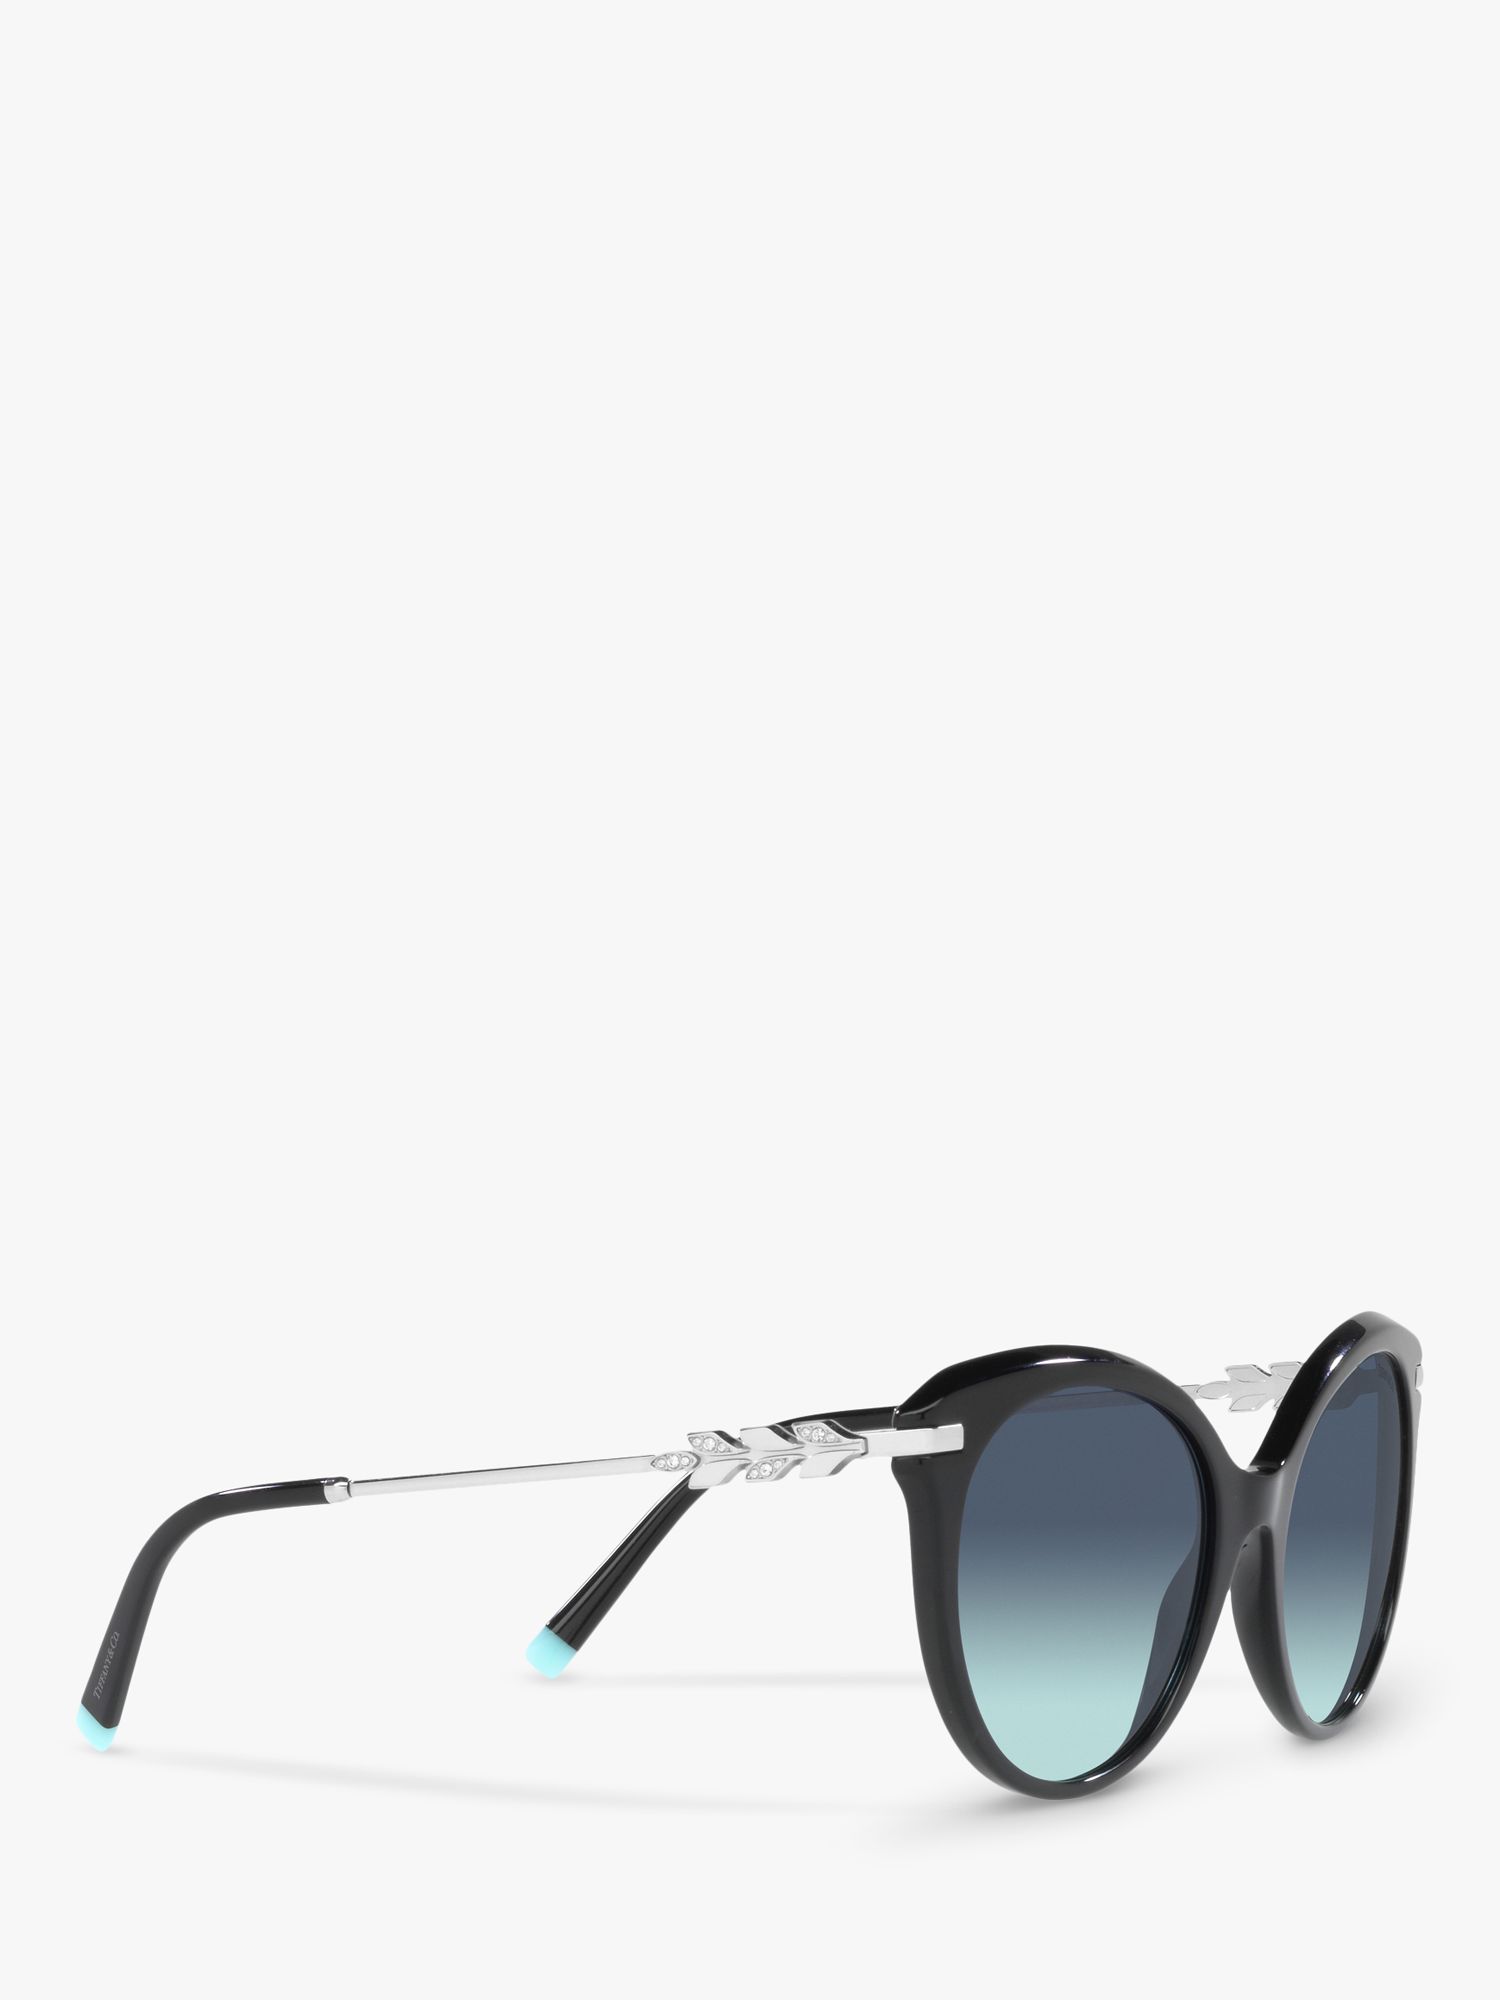 Tiffany & Co TF4189B Women's Cat's Eye Sunglasses, Black/Blue Gradient